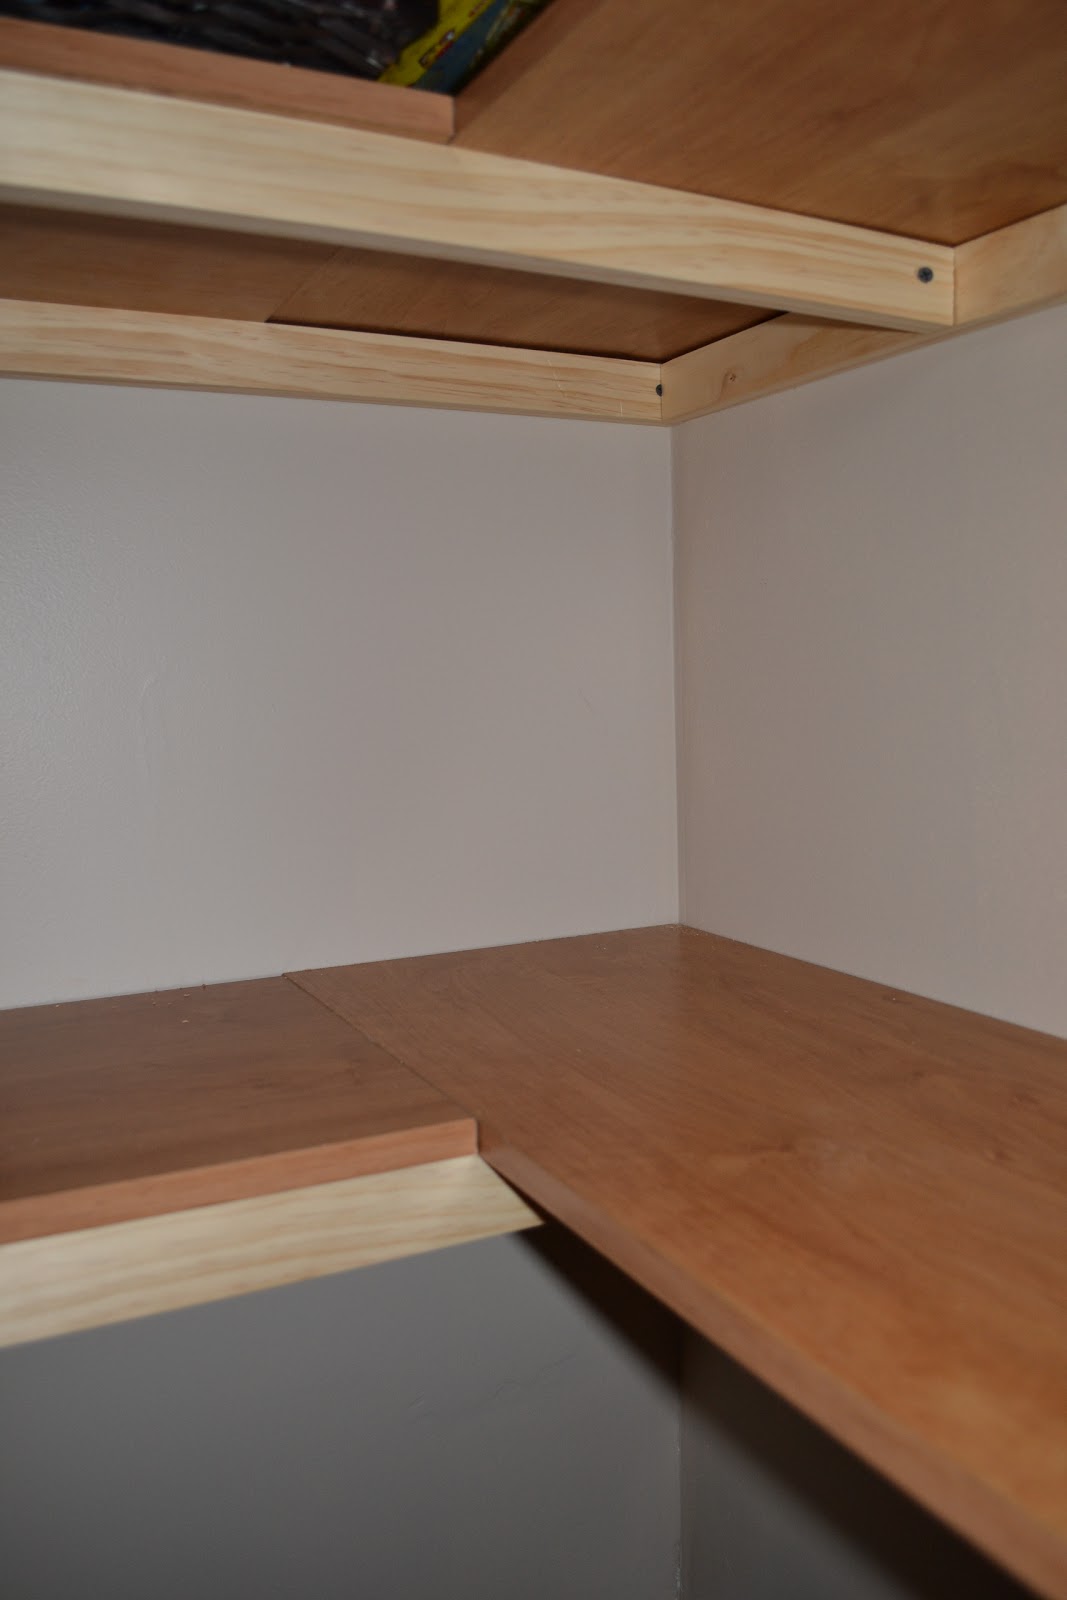 How to Build Shelving in a Closet Building a Wood Closet Shelves